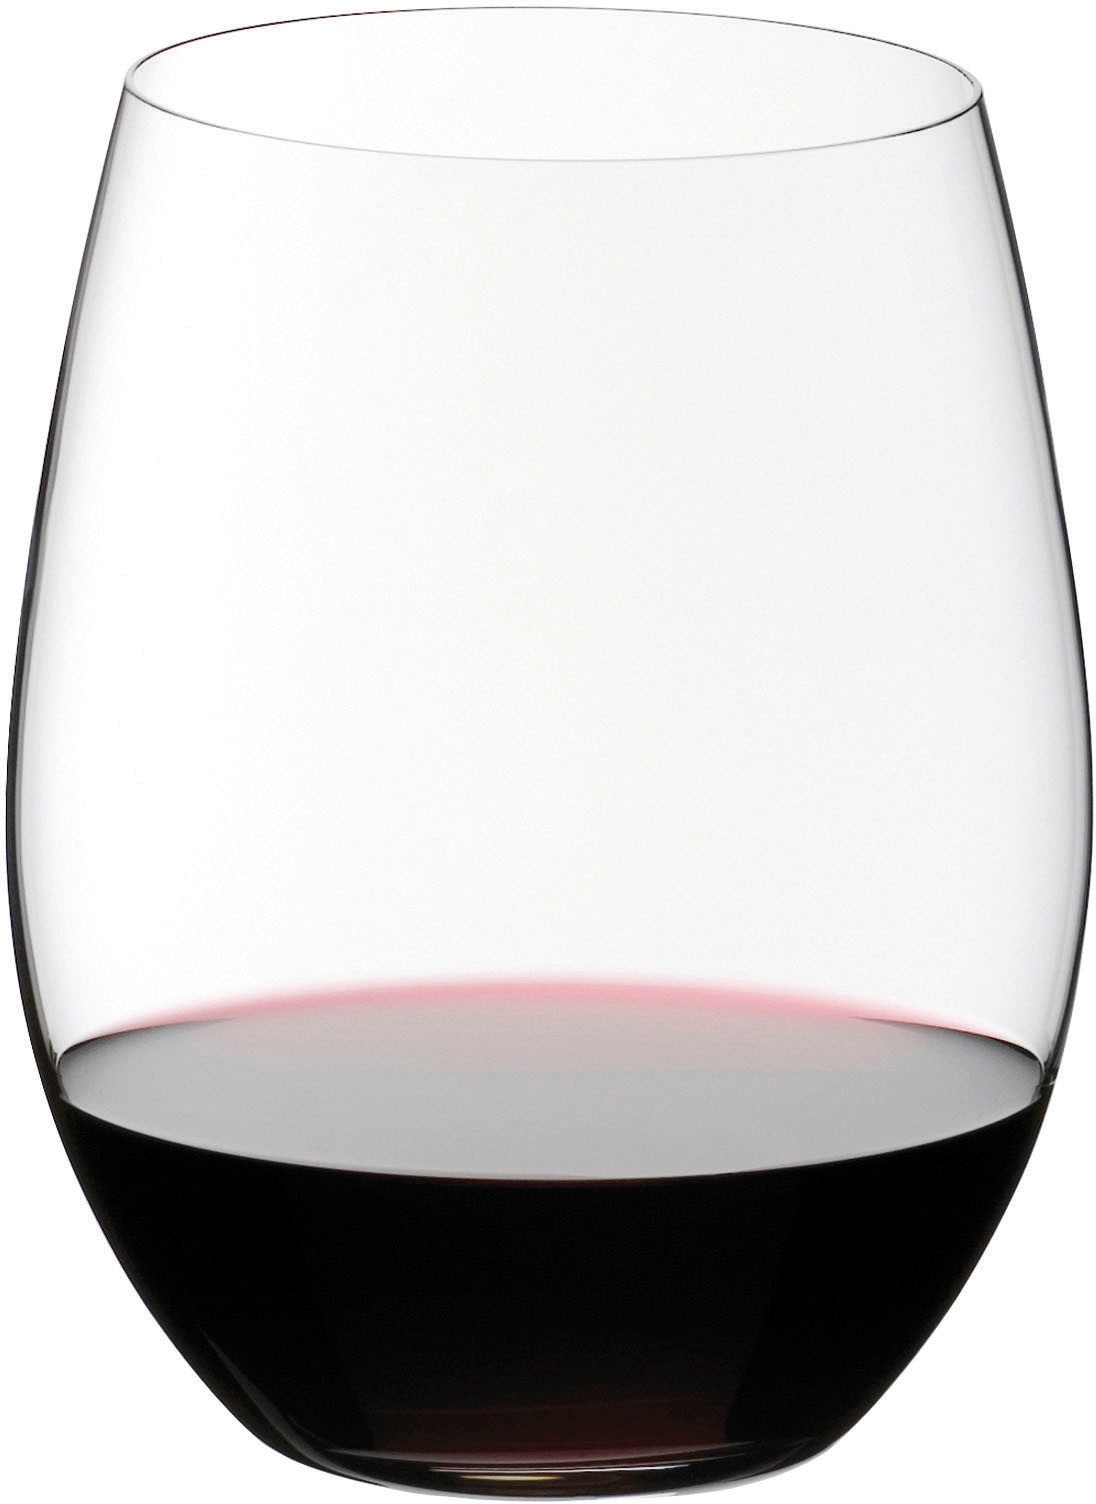 RIEDEL THE WINE GLASS COMPANY Rotweinglas »O«, (Set, 8 tlg., CABERNET/MERLOT), Made in Germany, 600 ml, 8-teilig